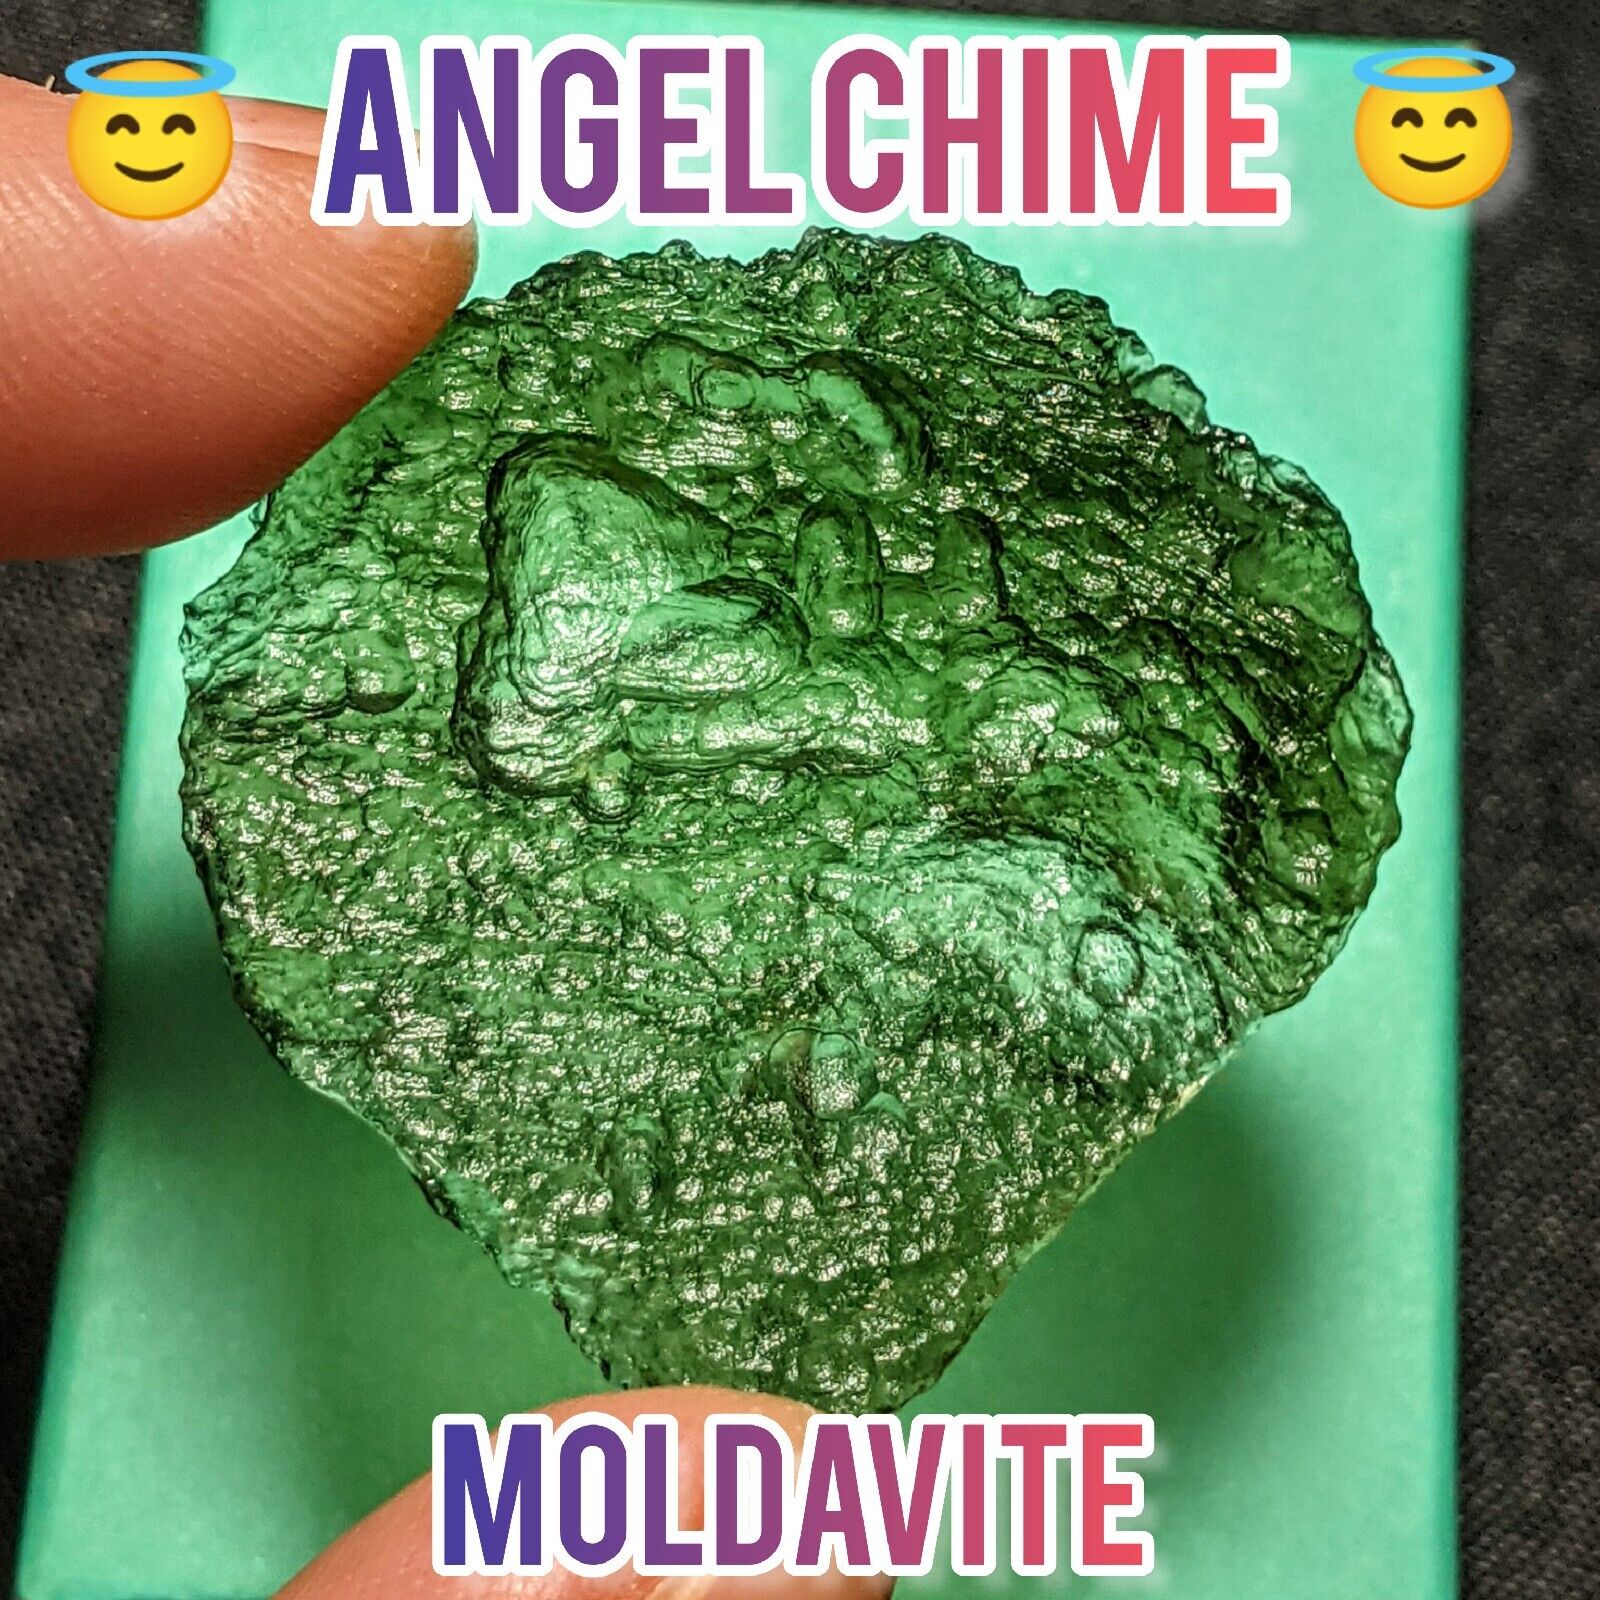 ANGEL CHIME MOLDAVITE Tektite Crystal Certificate Authenticity VOLUME ON VIDEO